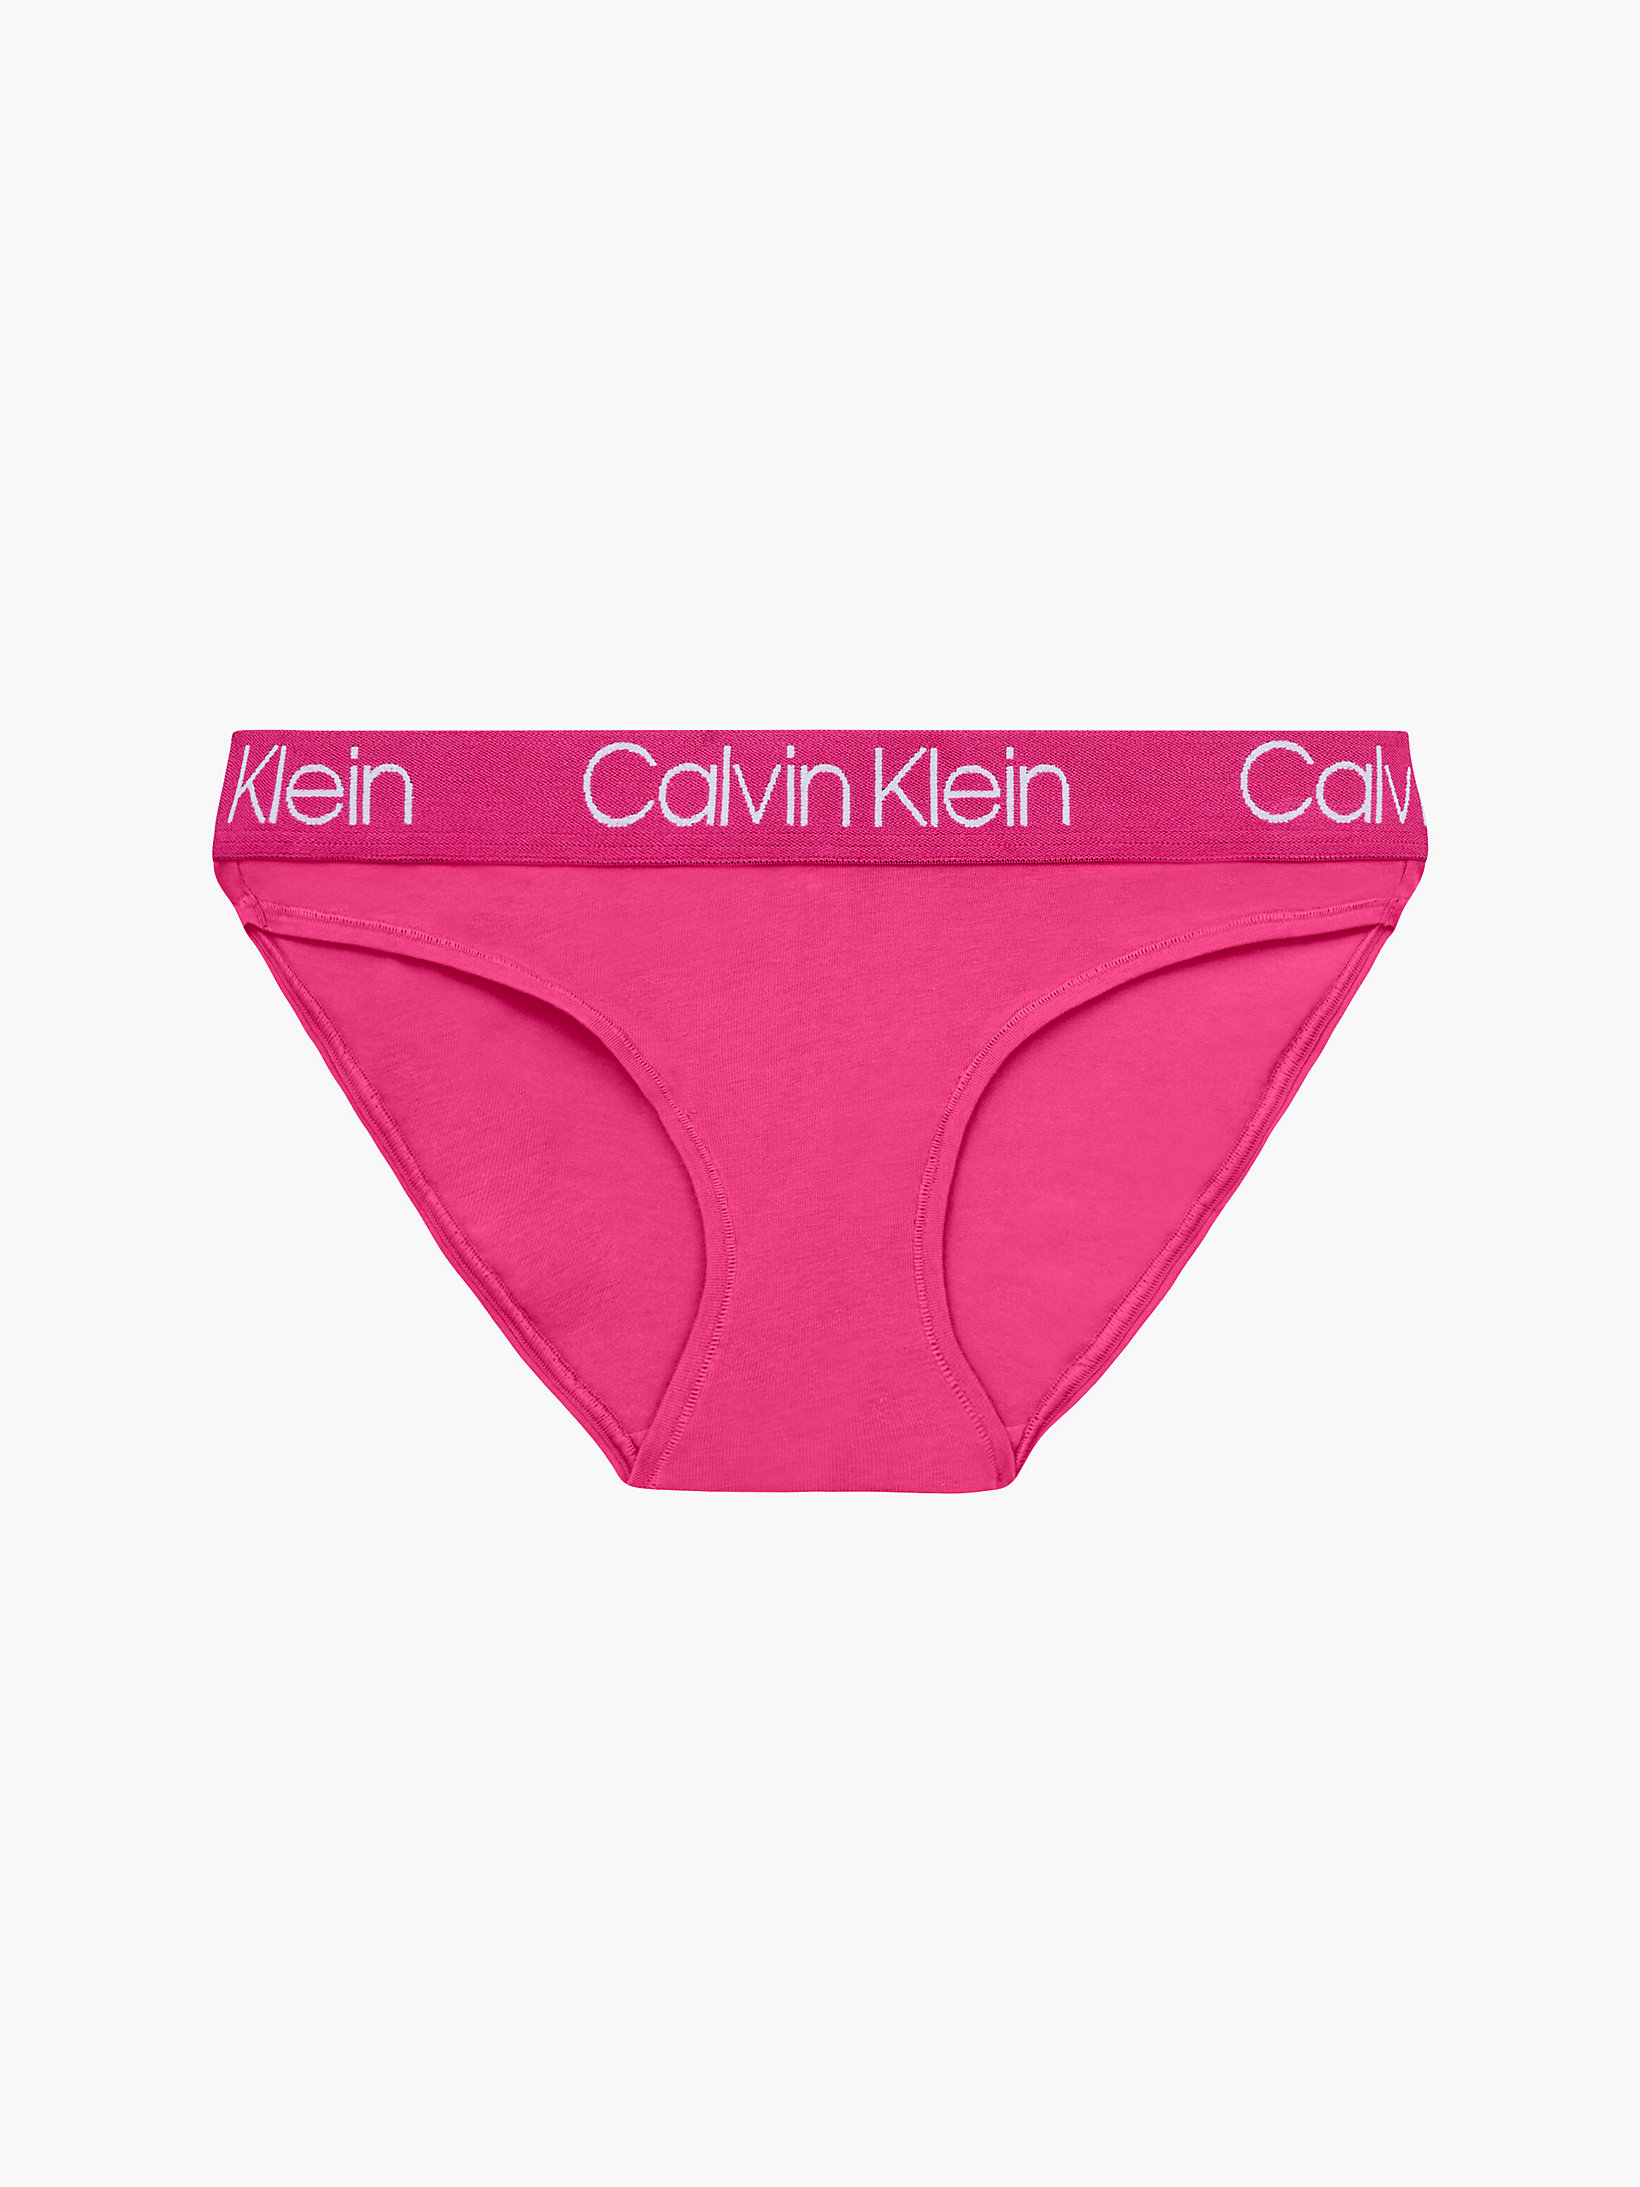 Raspberry Sorbet Bikini Brief - Body undefined women Calvin Klein